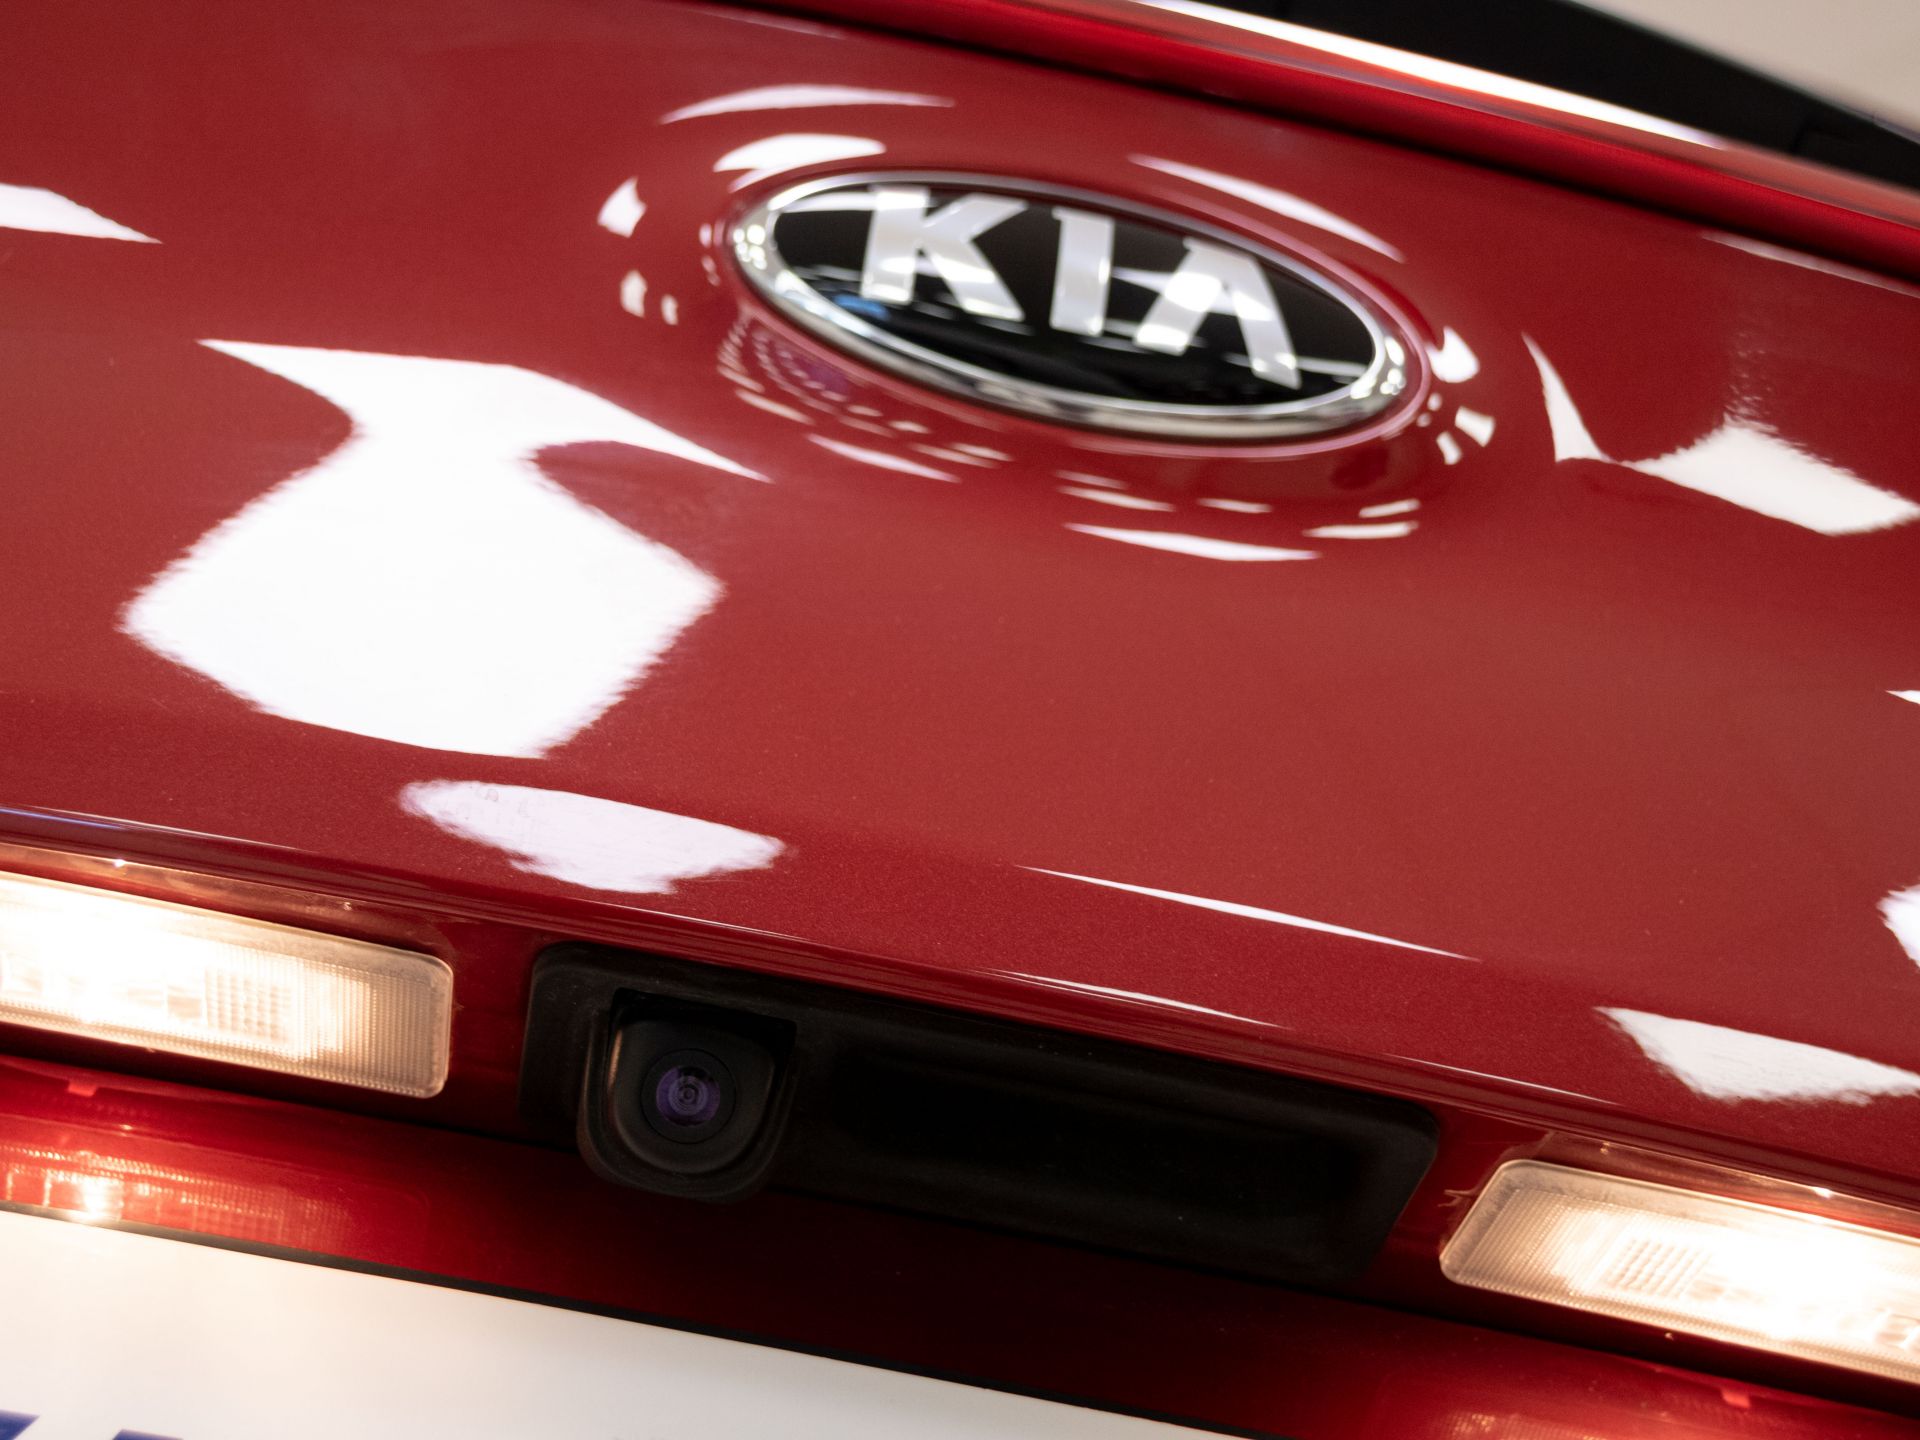 Kia Sportage 1.6 CRDi 85kW (115CV) Drive 4x2